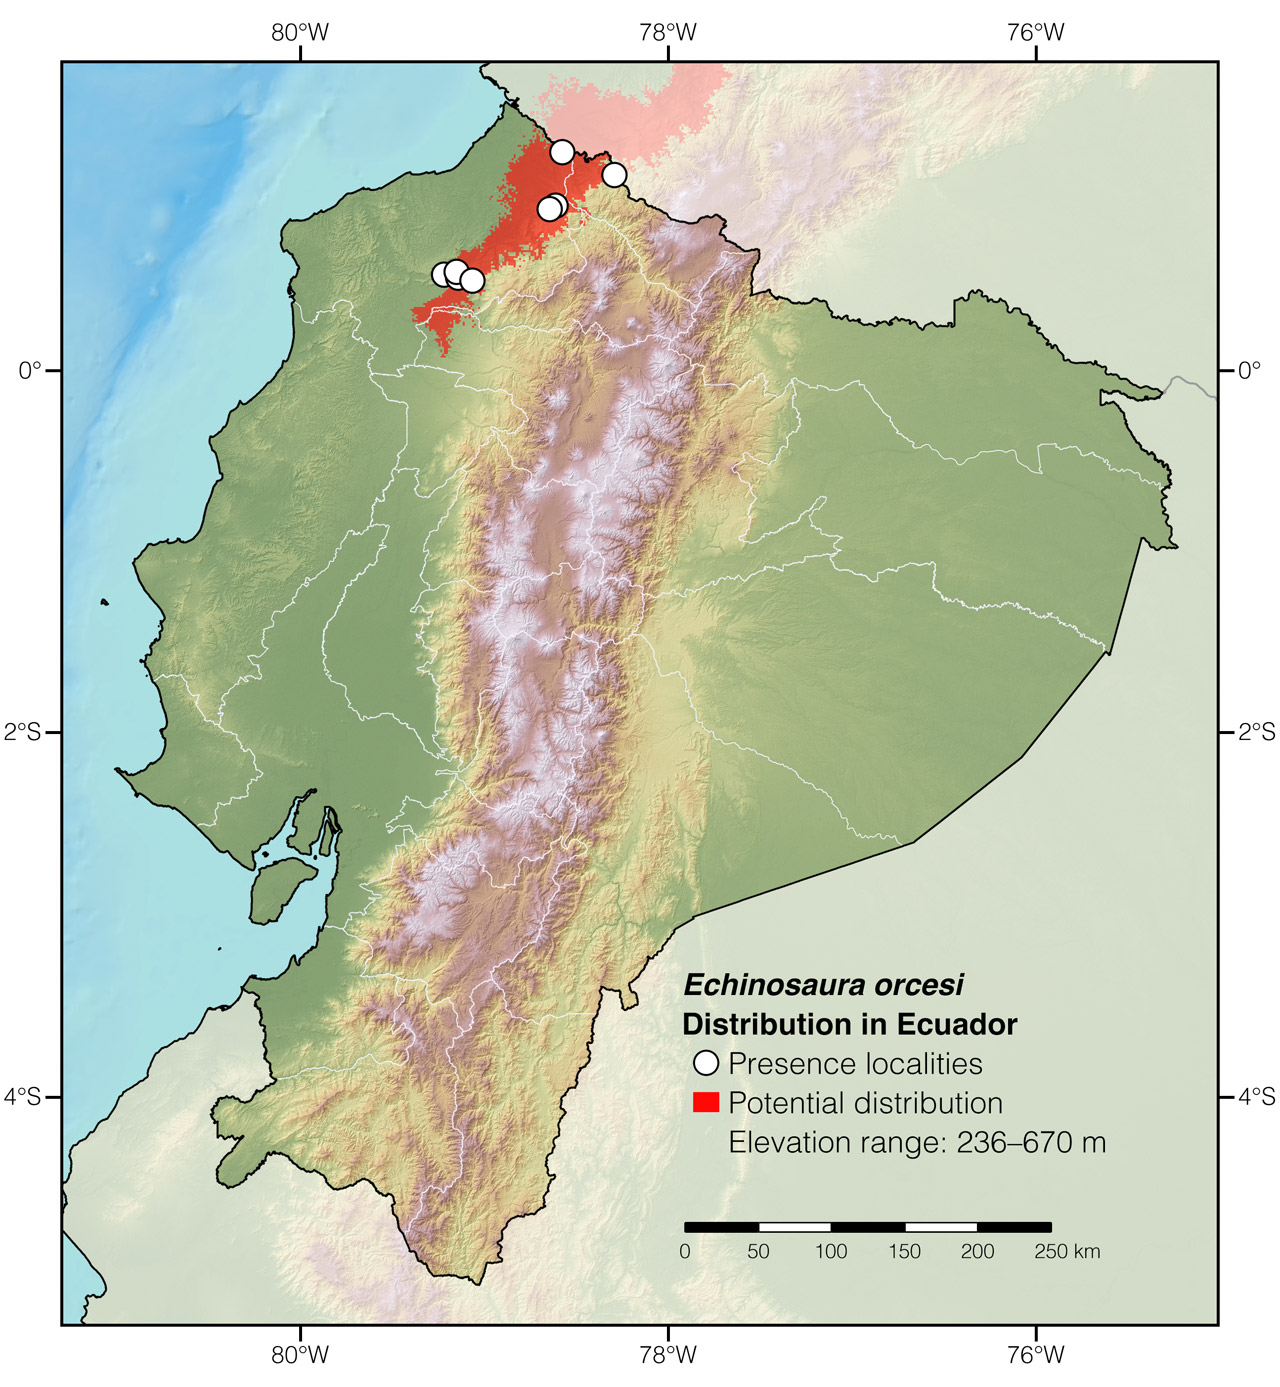 Distribution of Echinosaura orcesi in Ecuador